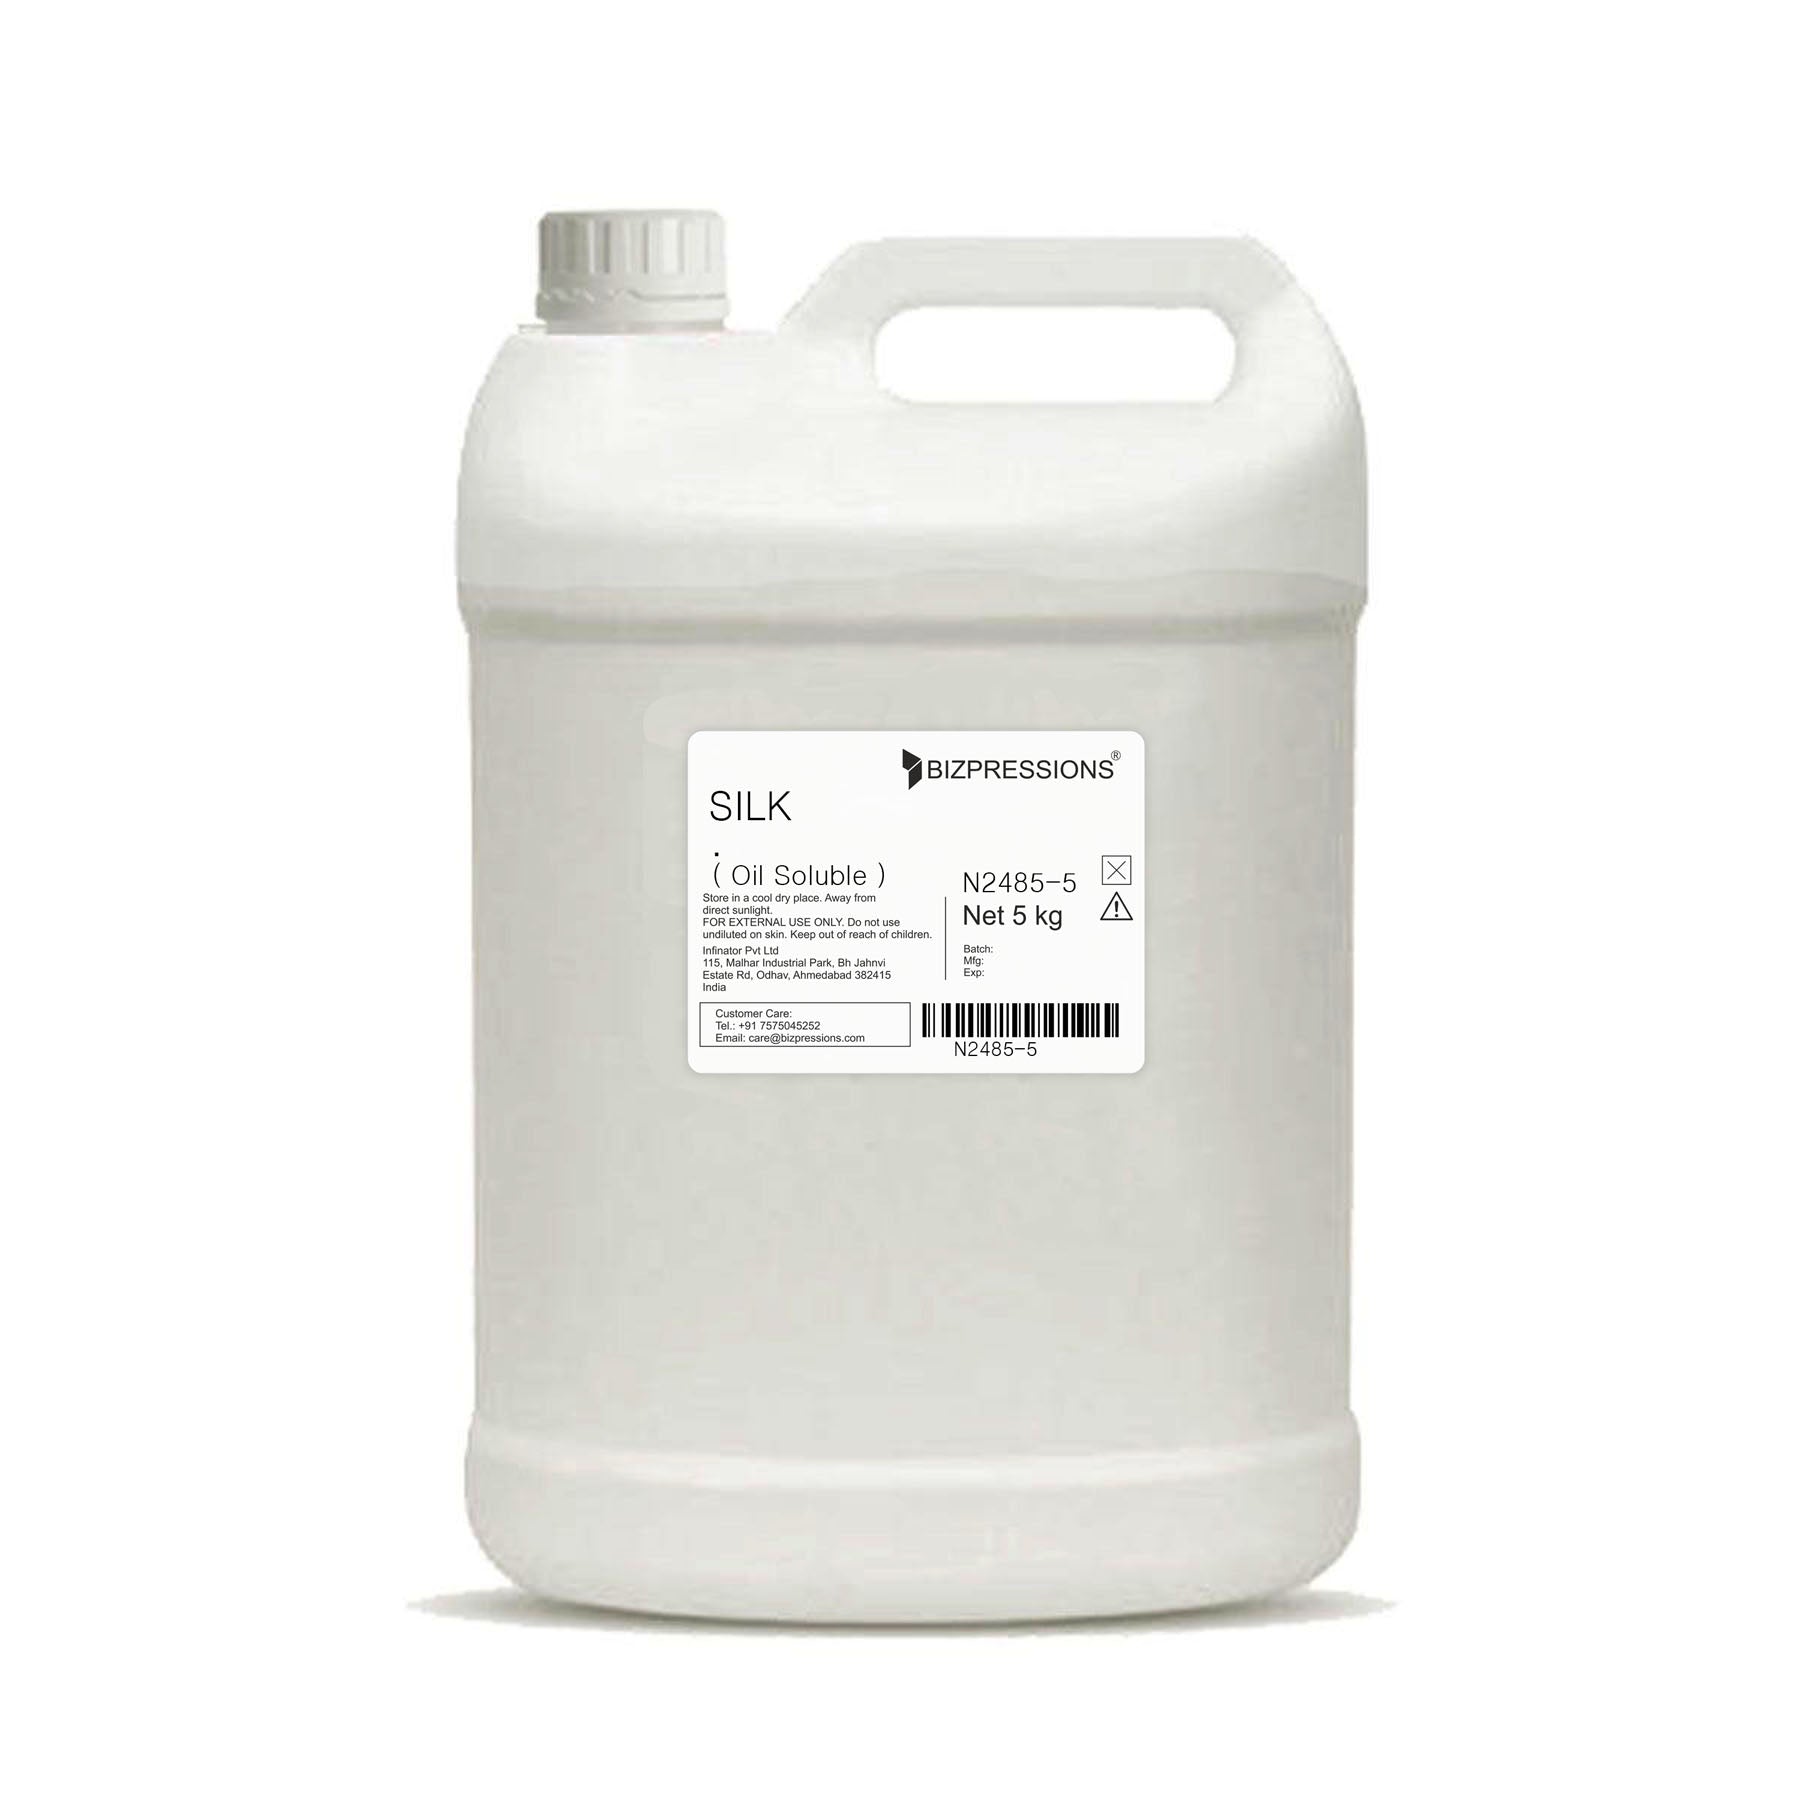 SILK - Fragrance ( Oil Soluble ) - 5 kg